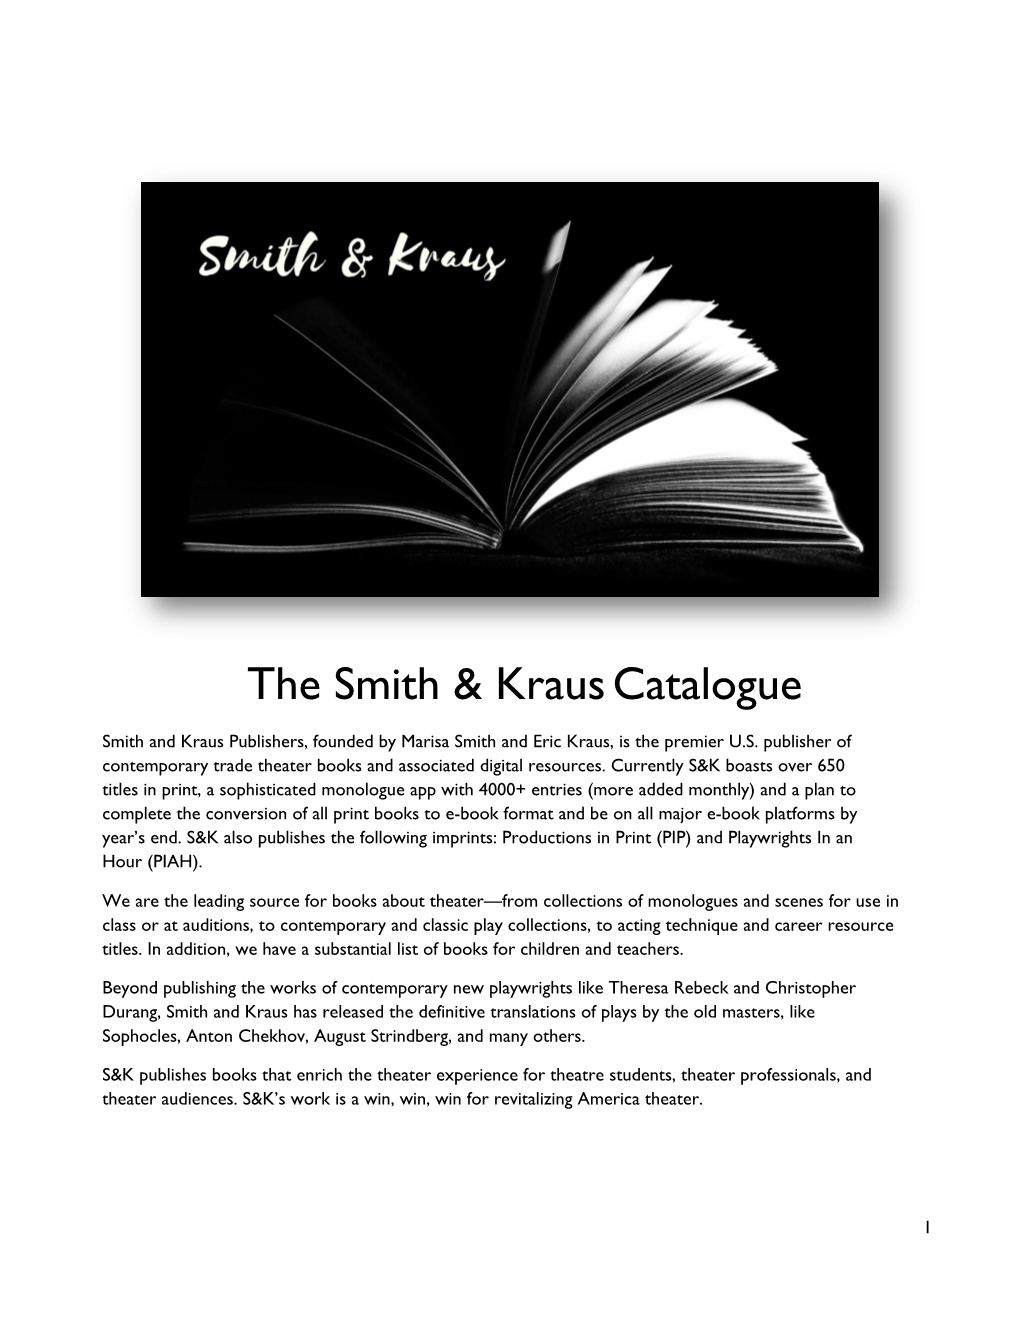 The Smith & Kraus Catalogue